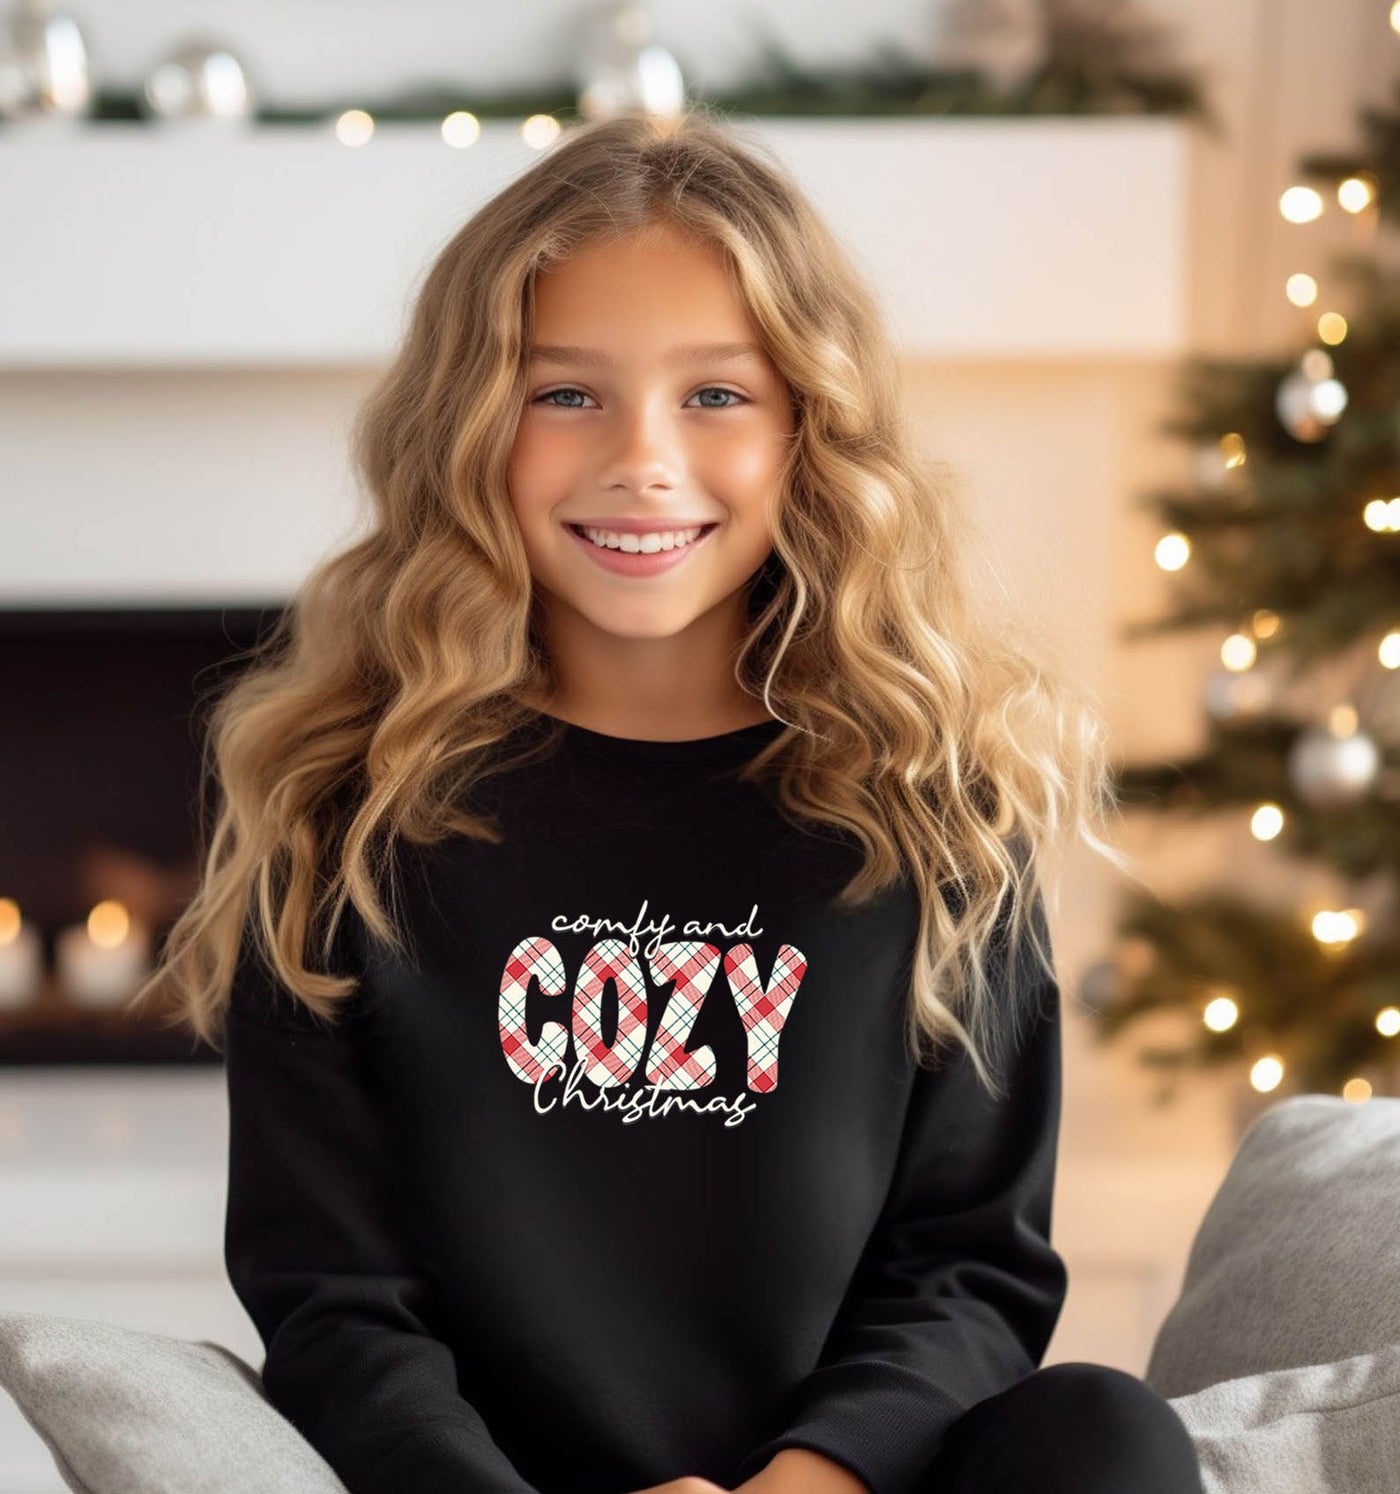 YOUTH/KIDS  Comfy & Cozy Christmas Sweatshirt